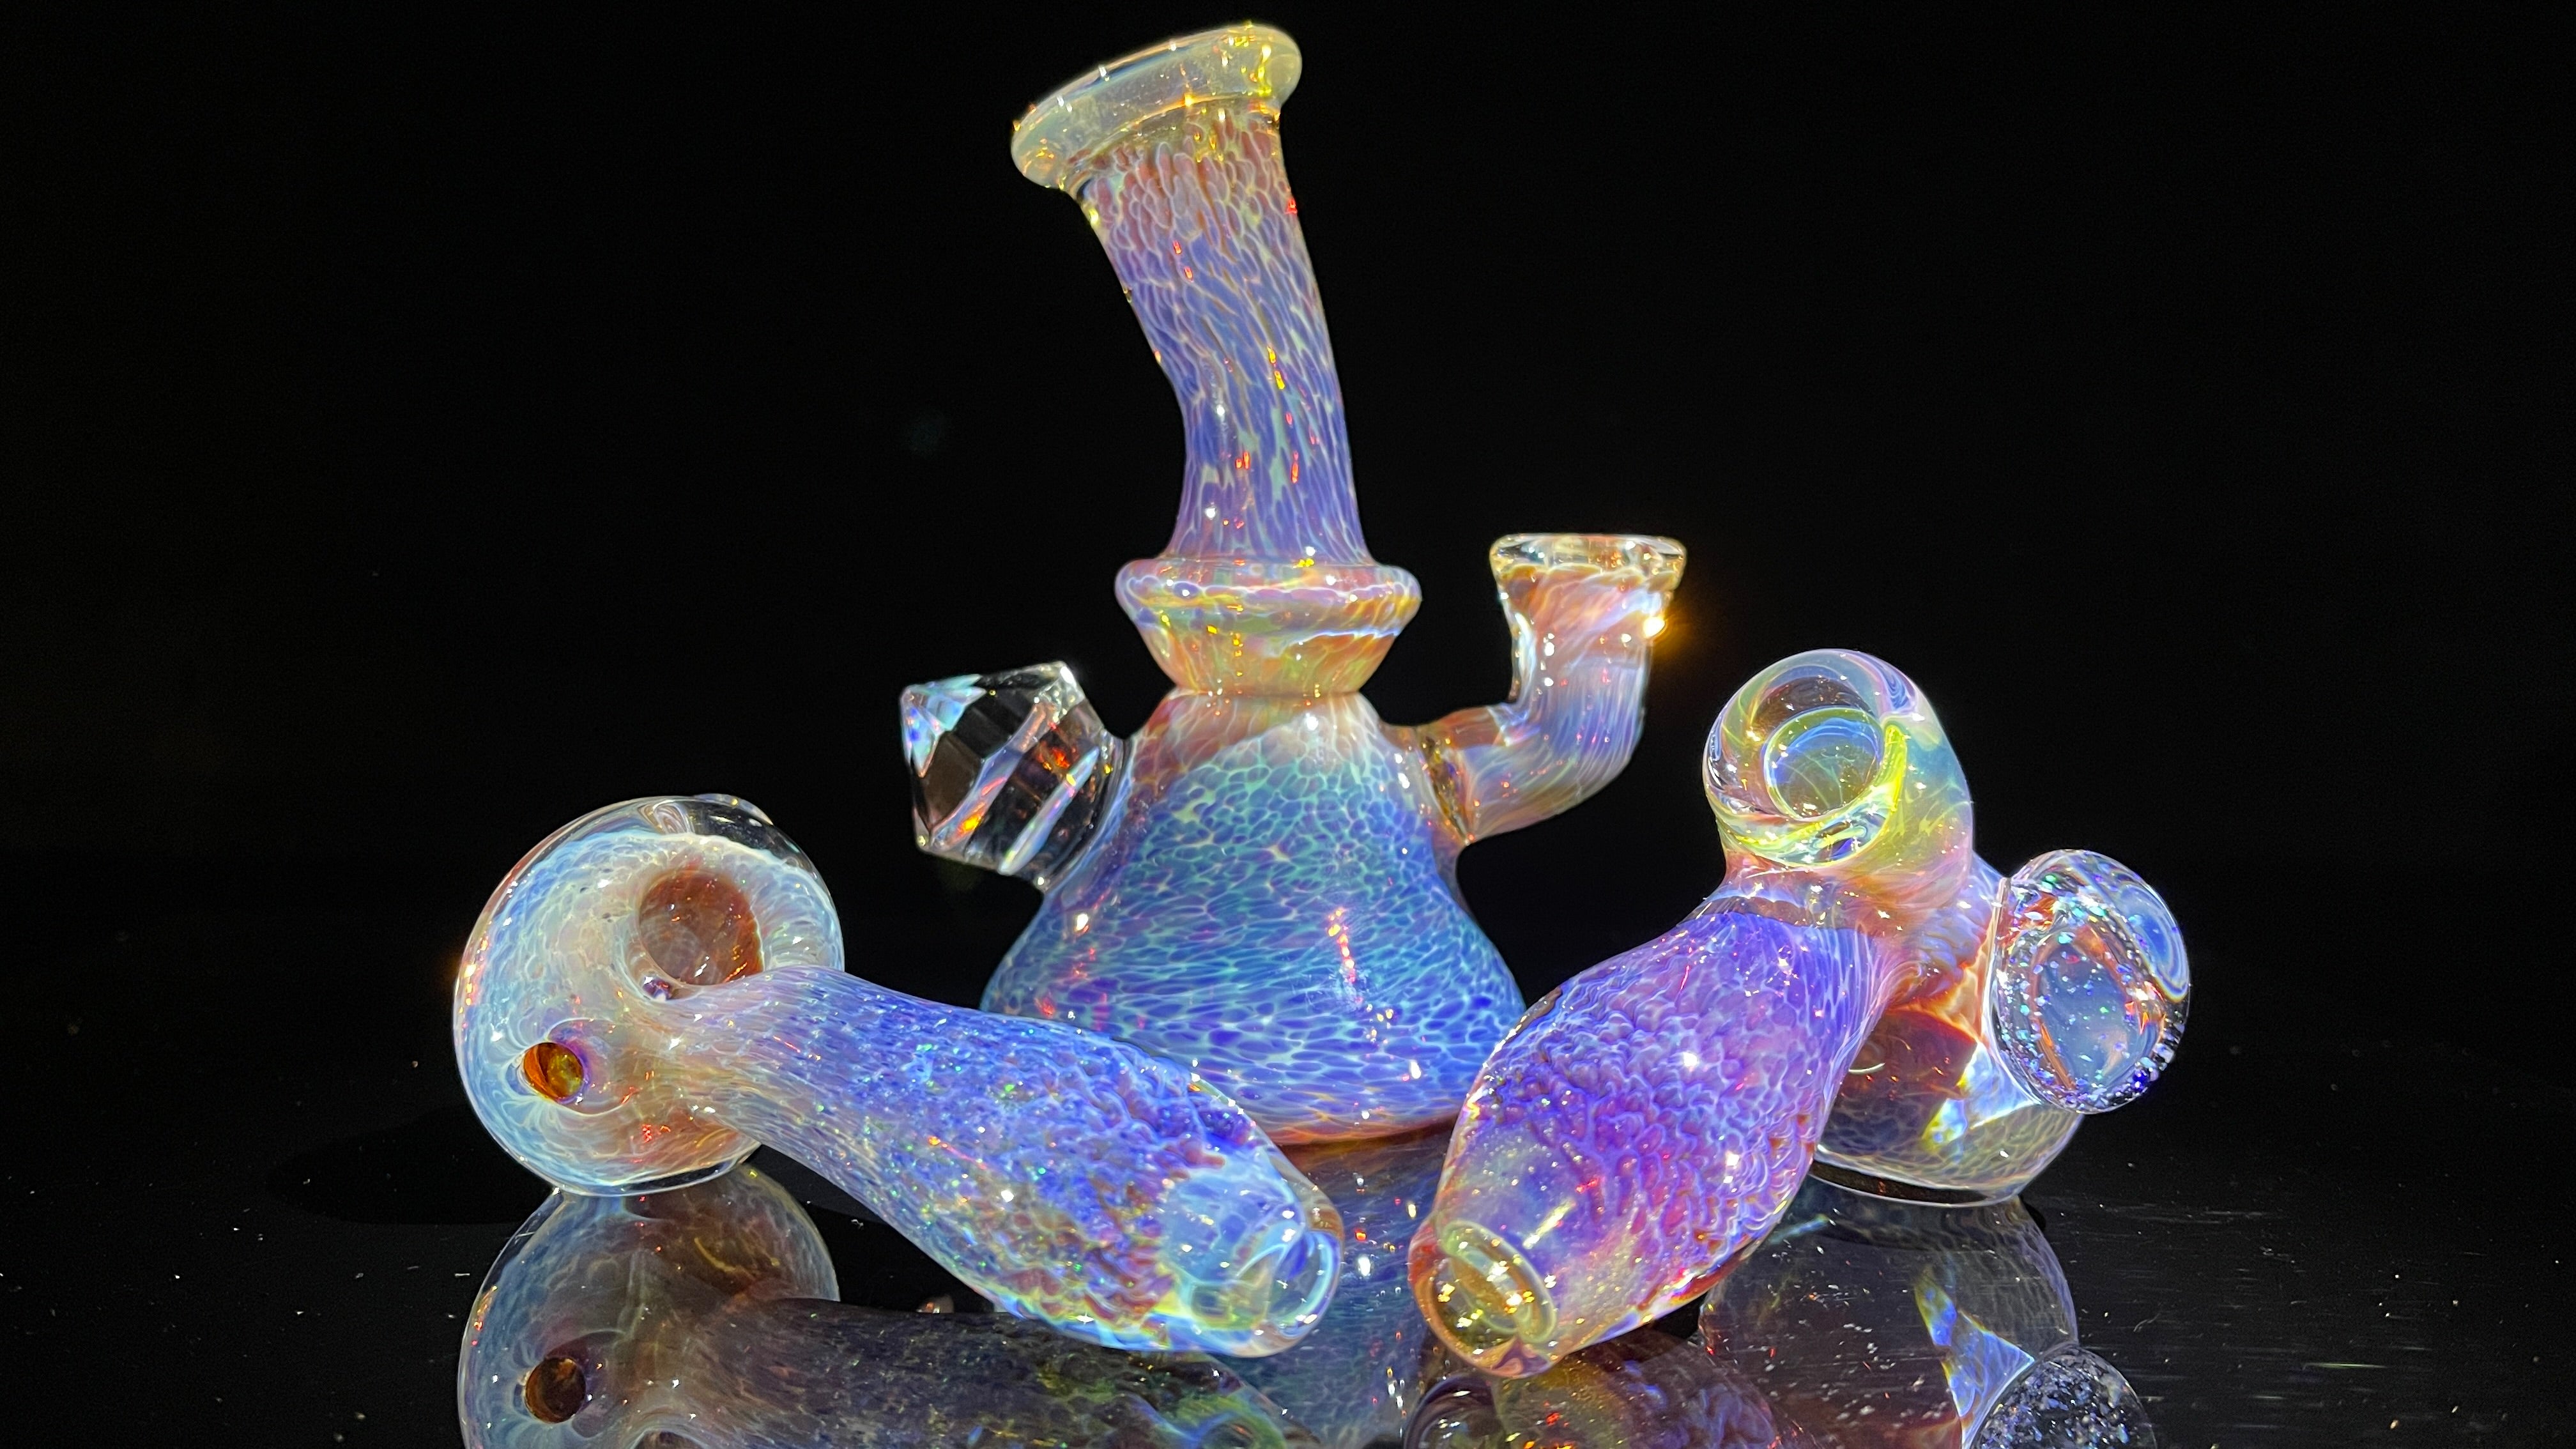 High Borosilicate Glass Pipe Thick Glass Handicraft Smoking Pipe Glass Bowl